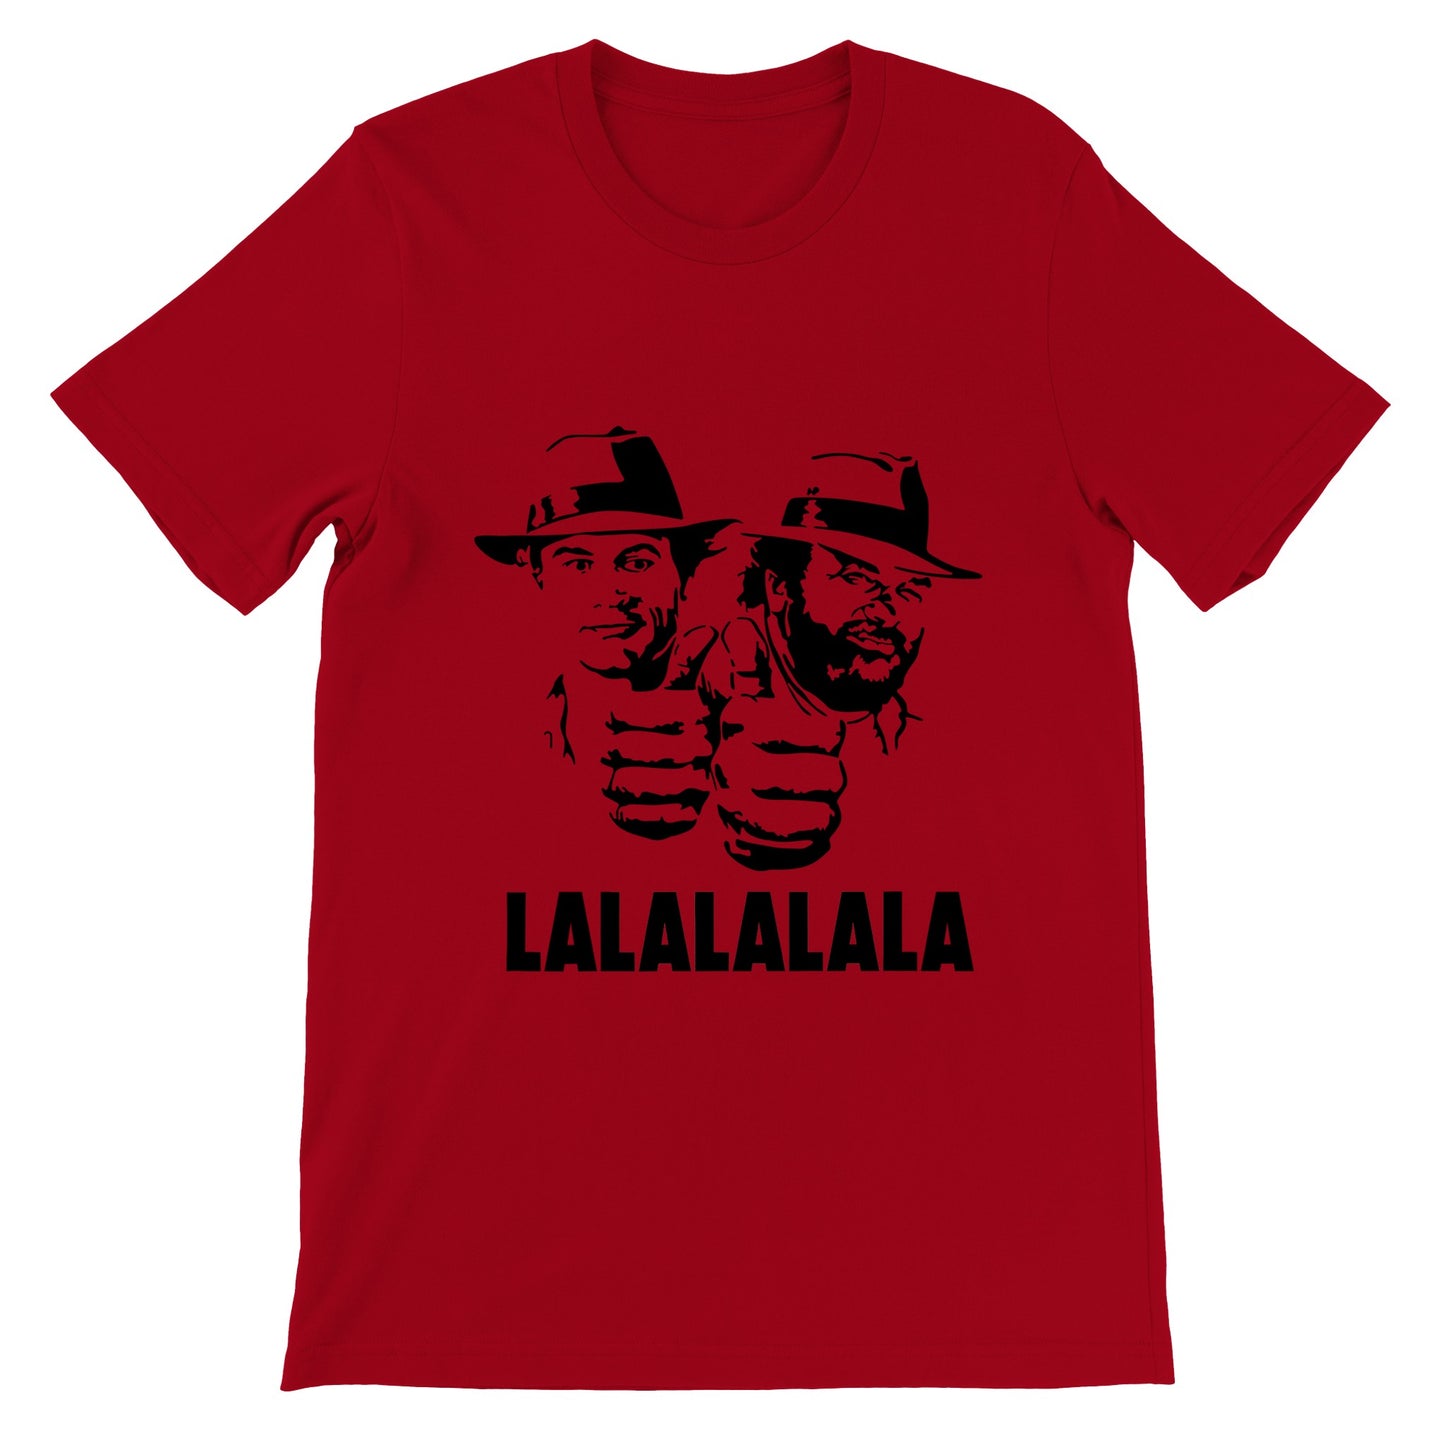 Lalalalala - Premium Männer / Unisex T-Shirt mit Rundhalsausschnitt